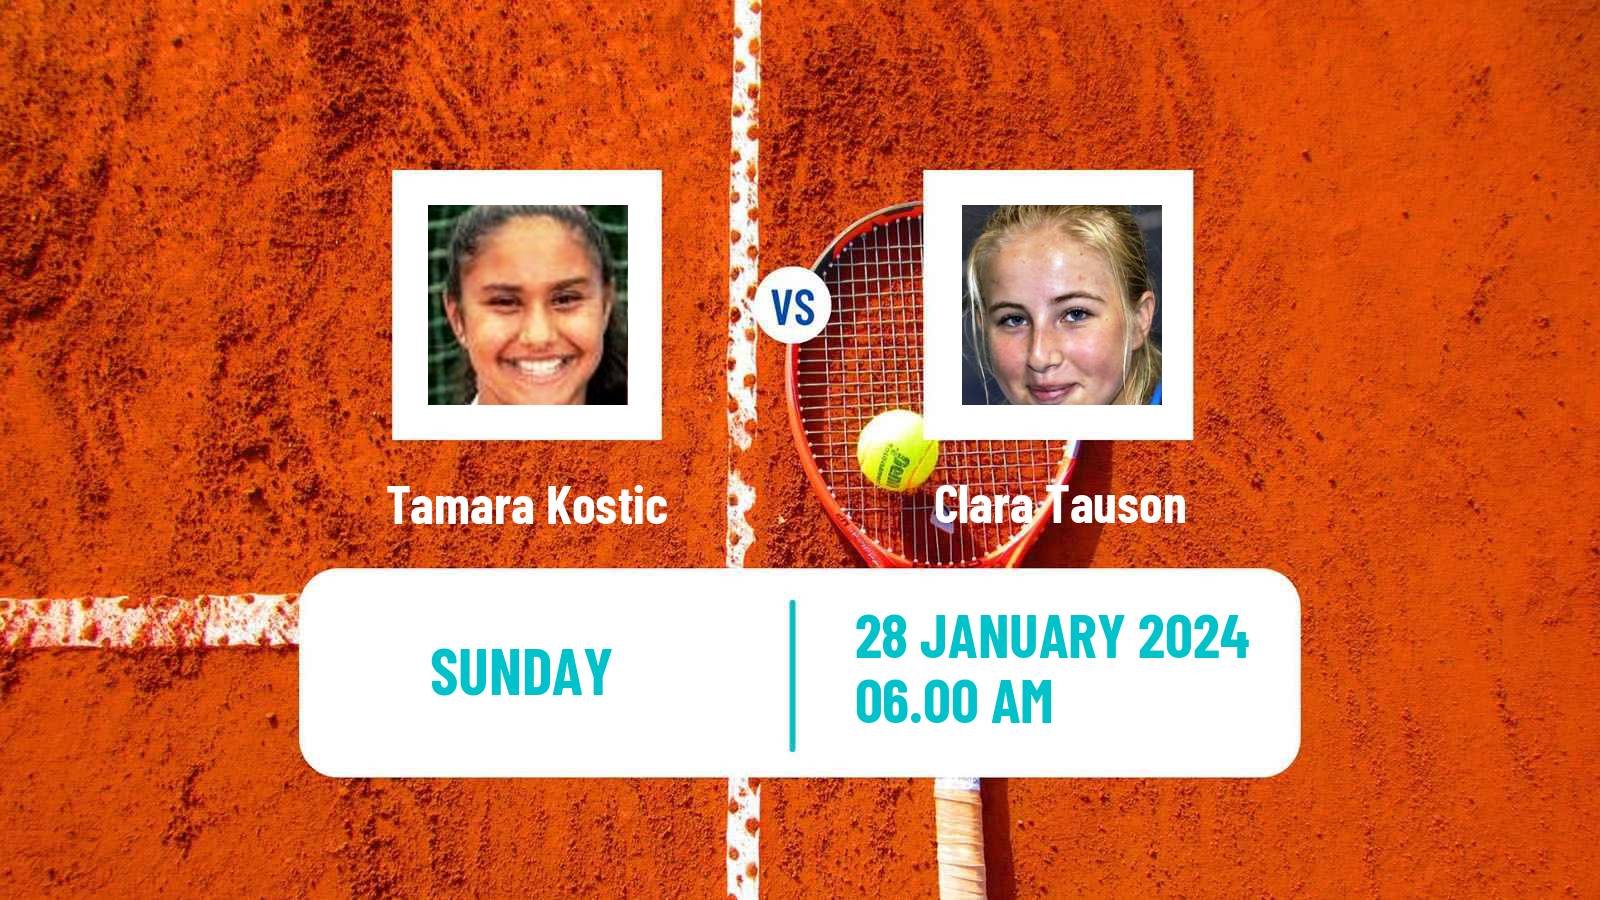 Tennis WTA Linz Tamara Kostic - Clara Tauson